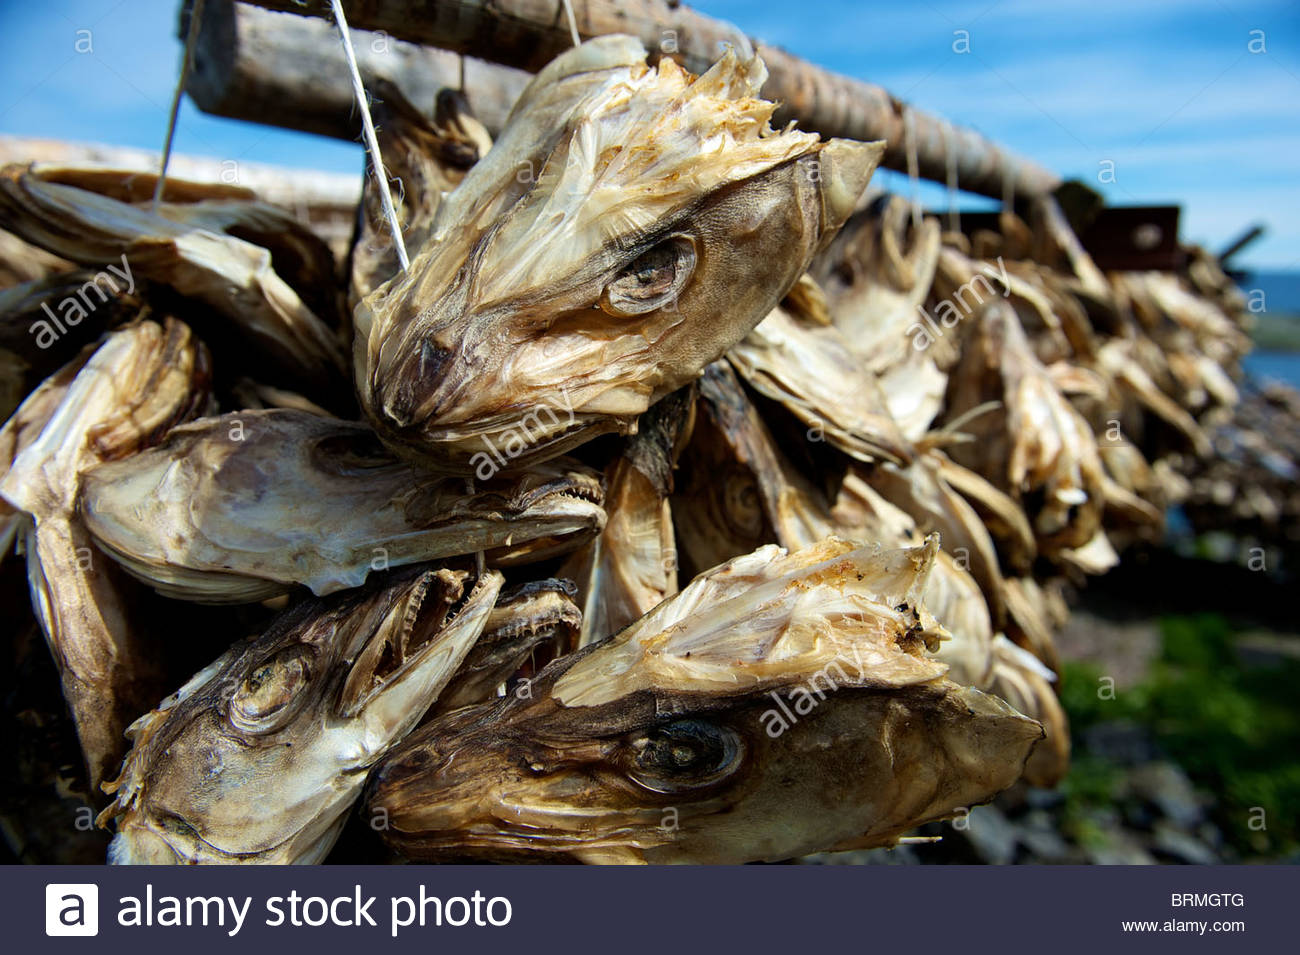 Cod fish head